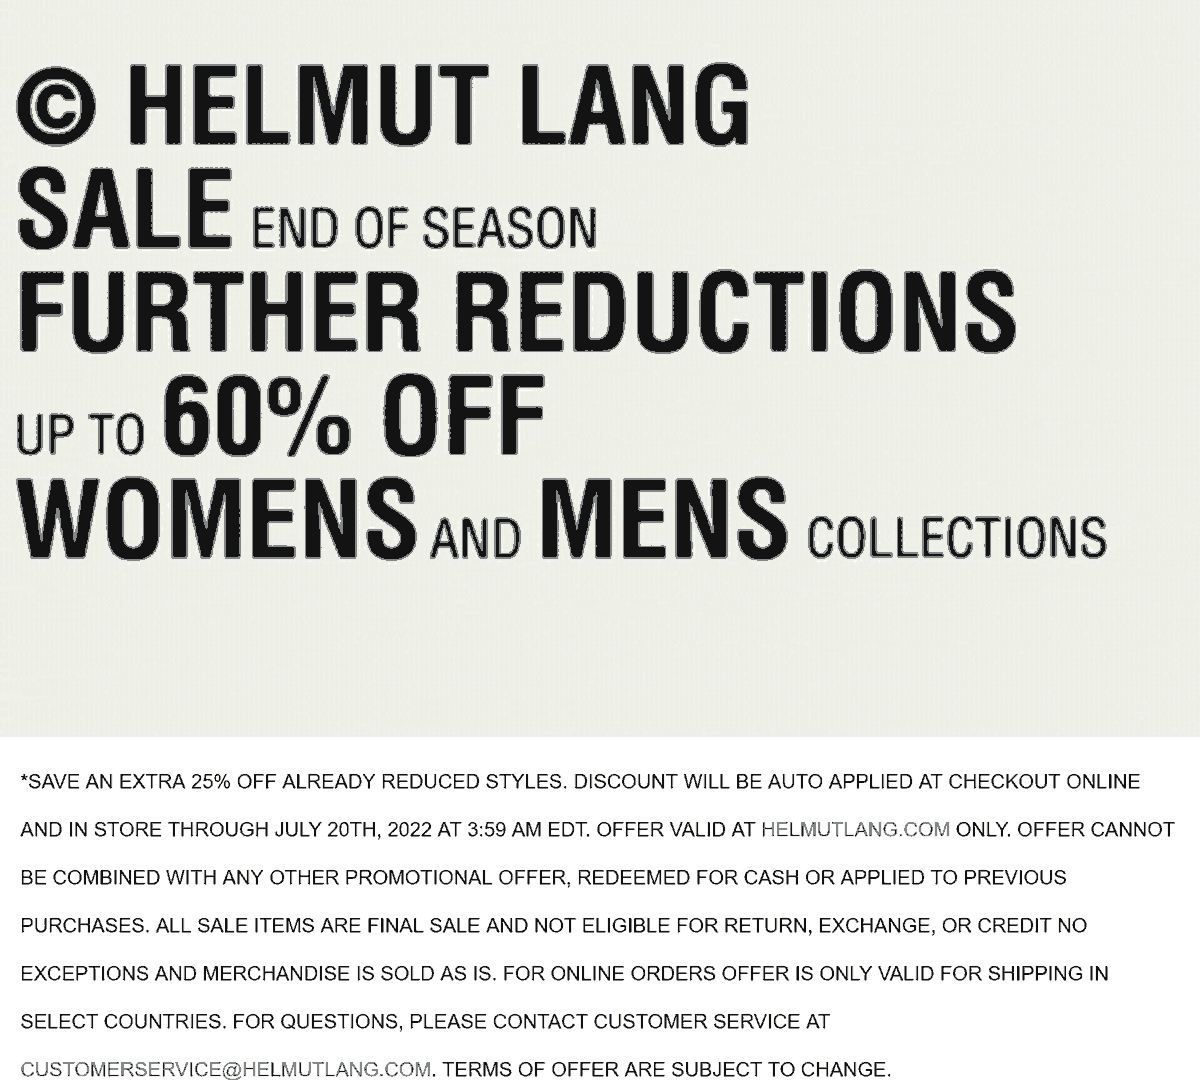 Helmut Lang coupons & promo code for [November 2022]